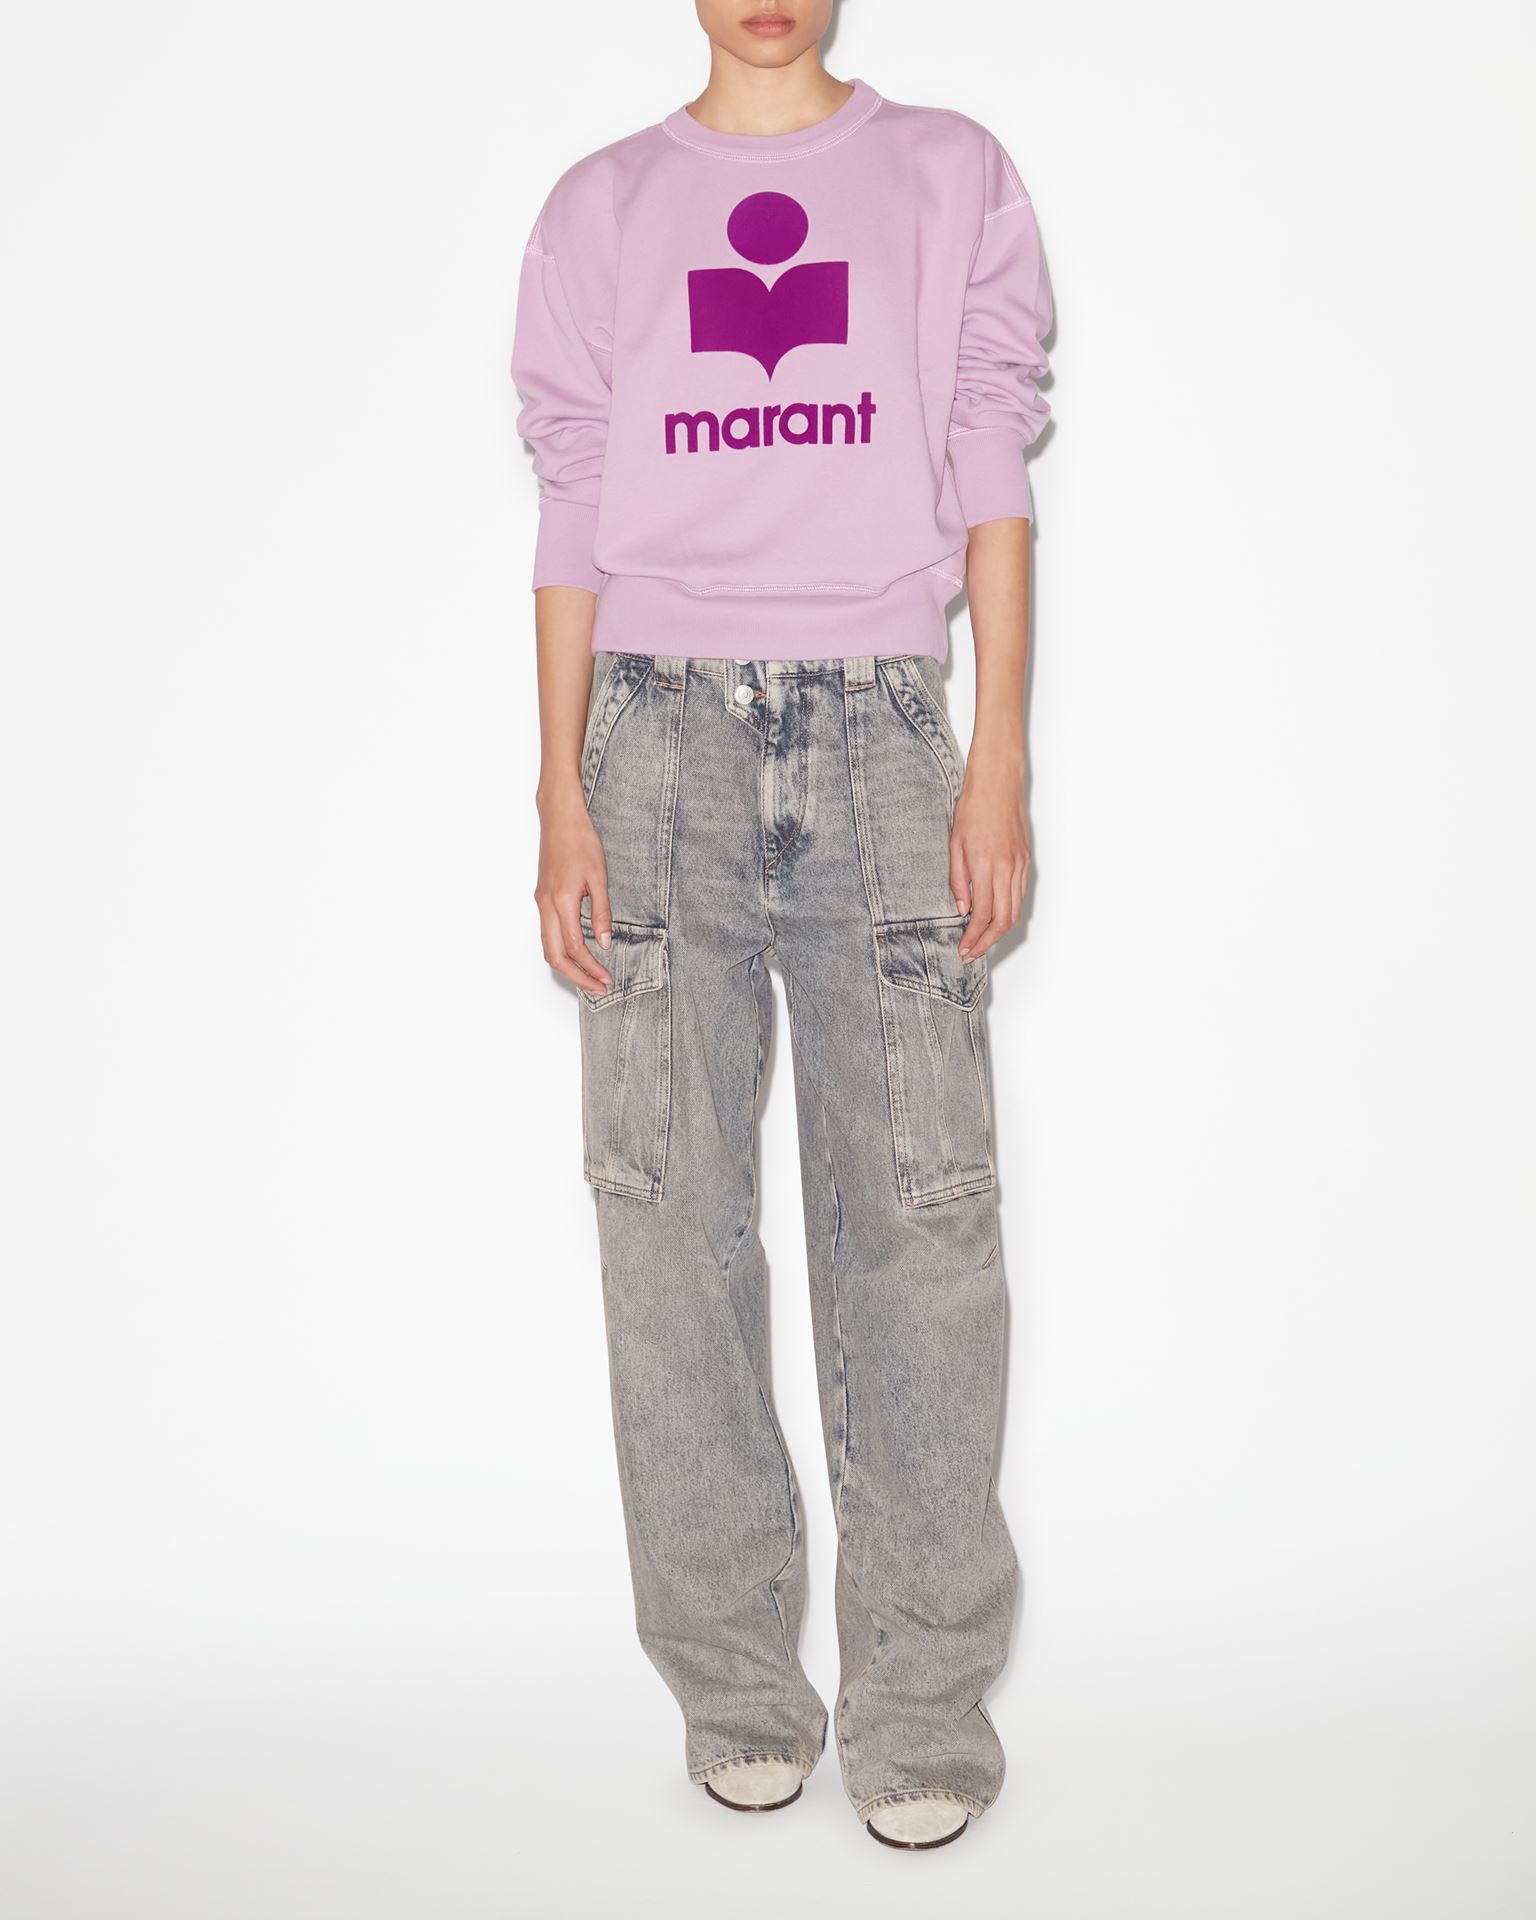 Isabel Marant Marant Étoile, Mobyli Logo Sweatshirt - Women - Pink